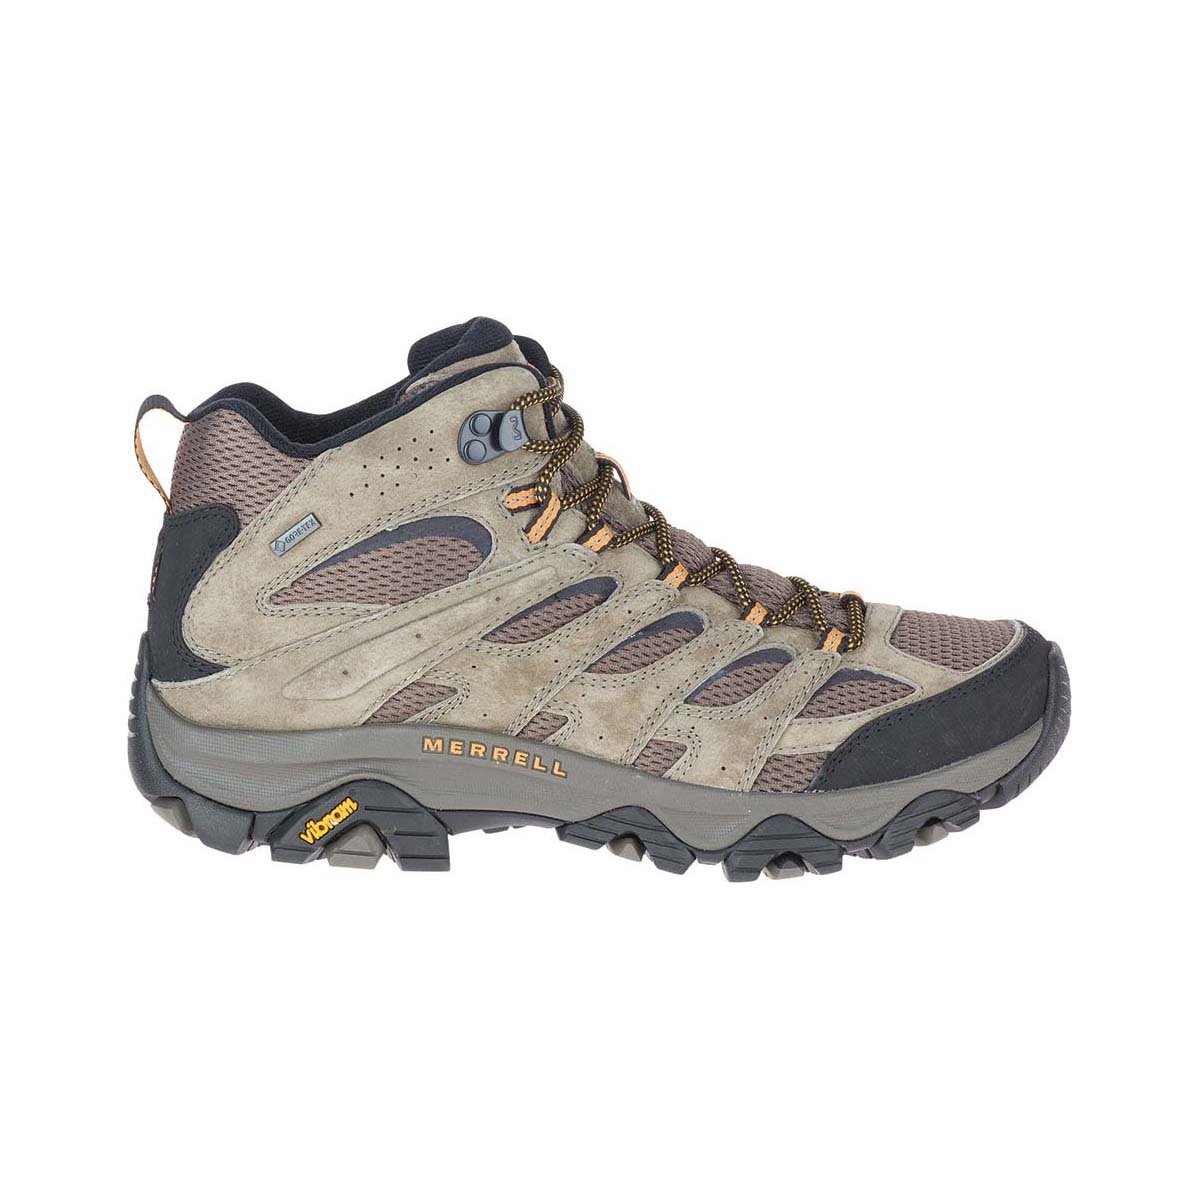 Merrell Men's Moab Mid GTX Hiking Boots 9.5